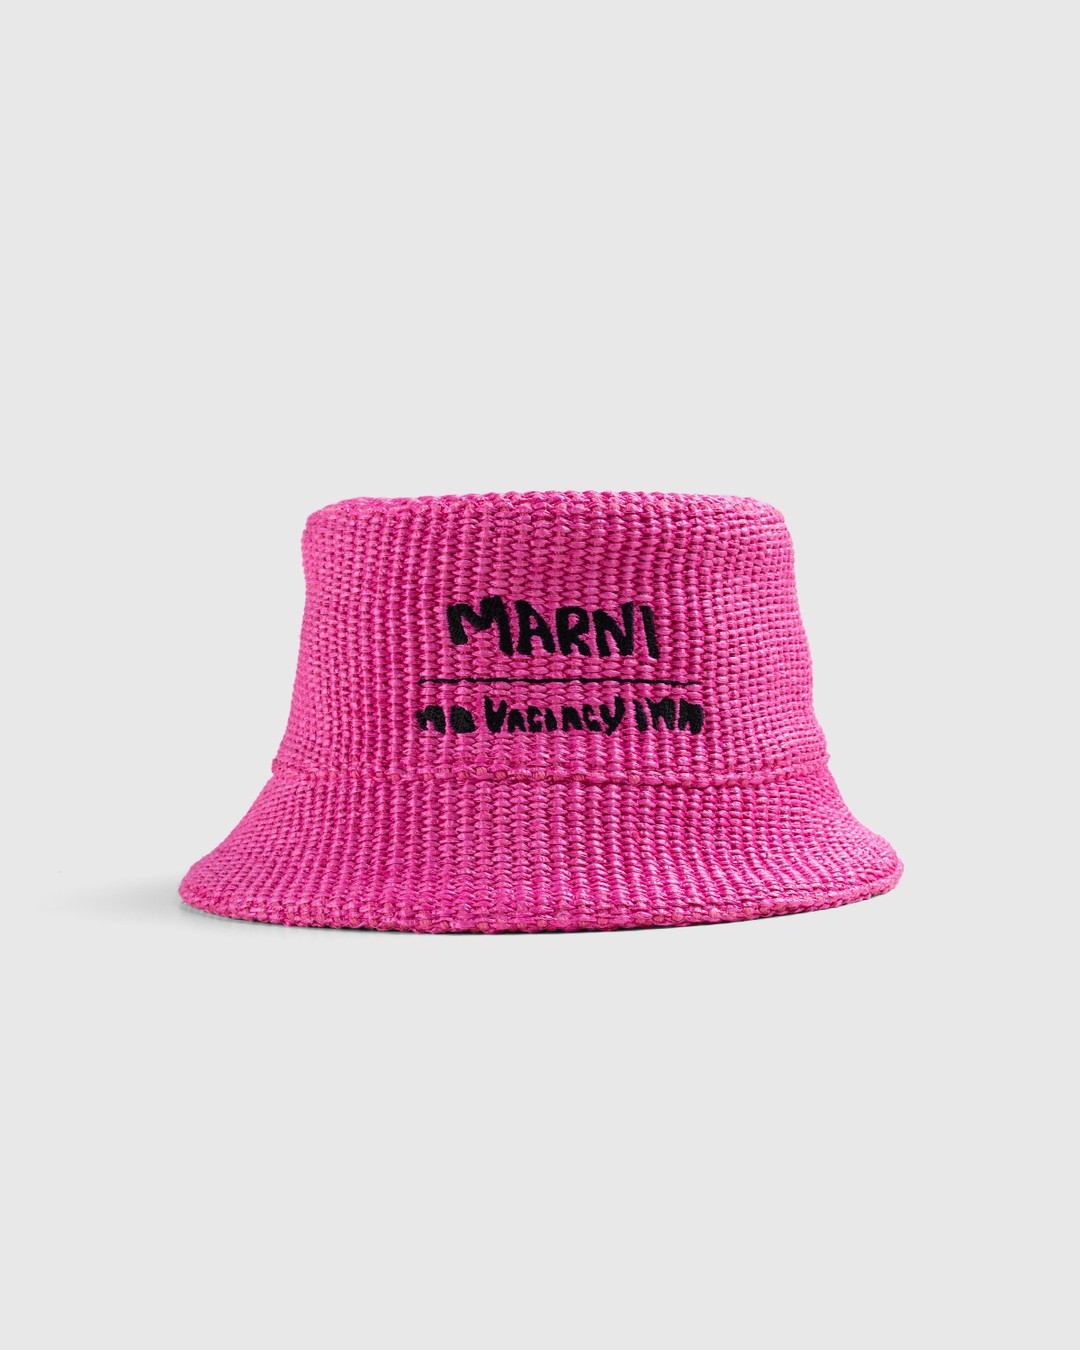 Marni x No Vacancy Inn – Raffia Bucket Hat Fuschia - Hats - Pink - Image 1